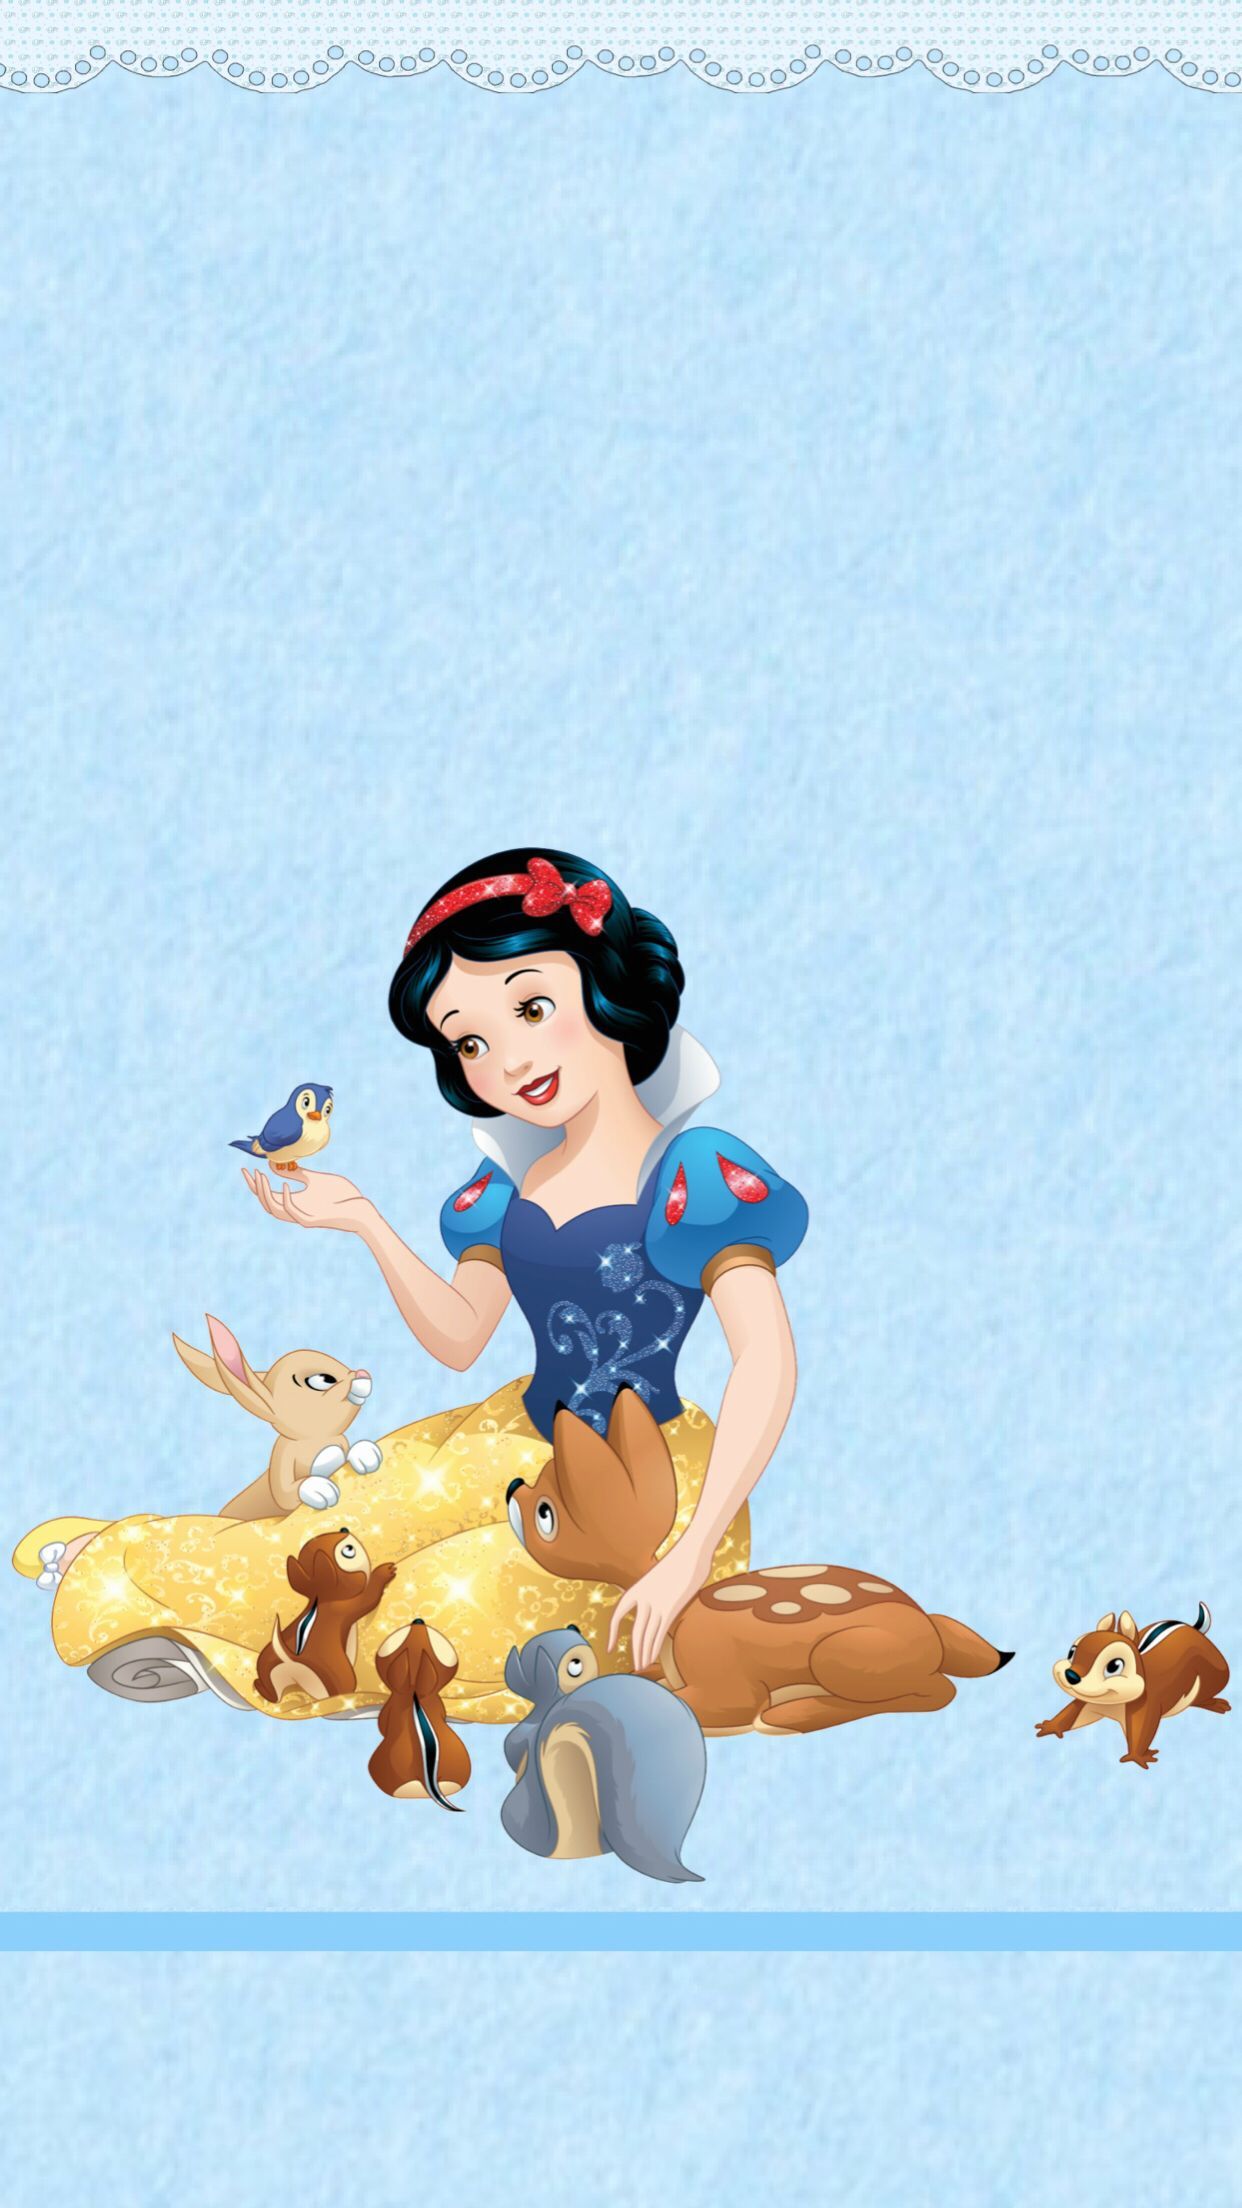 Snow White and the Seven Dwarfs wallpaper - Disney, princess